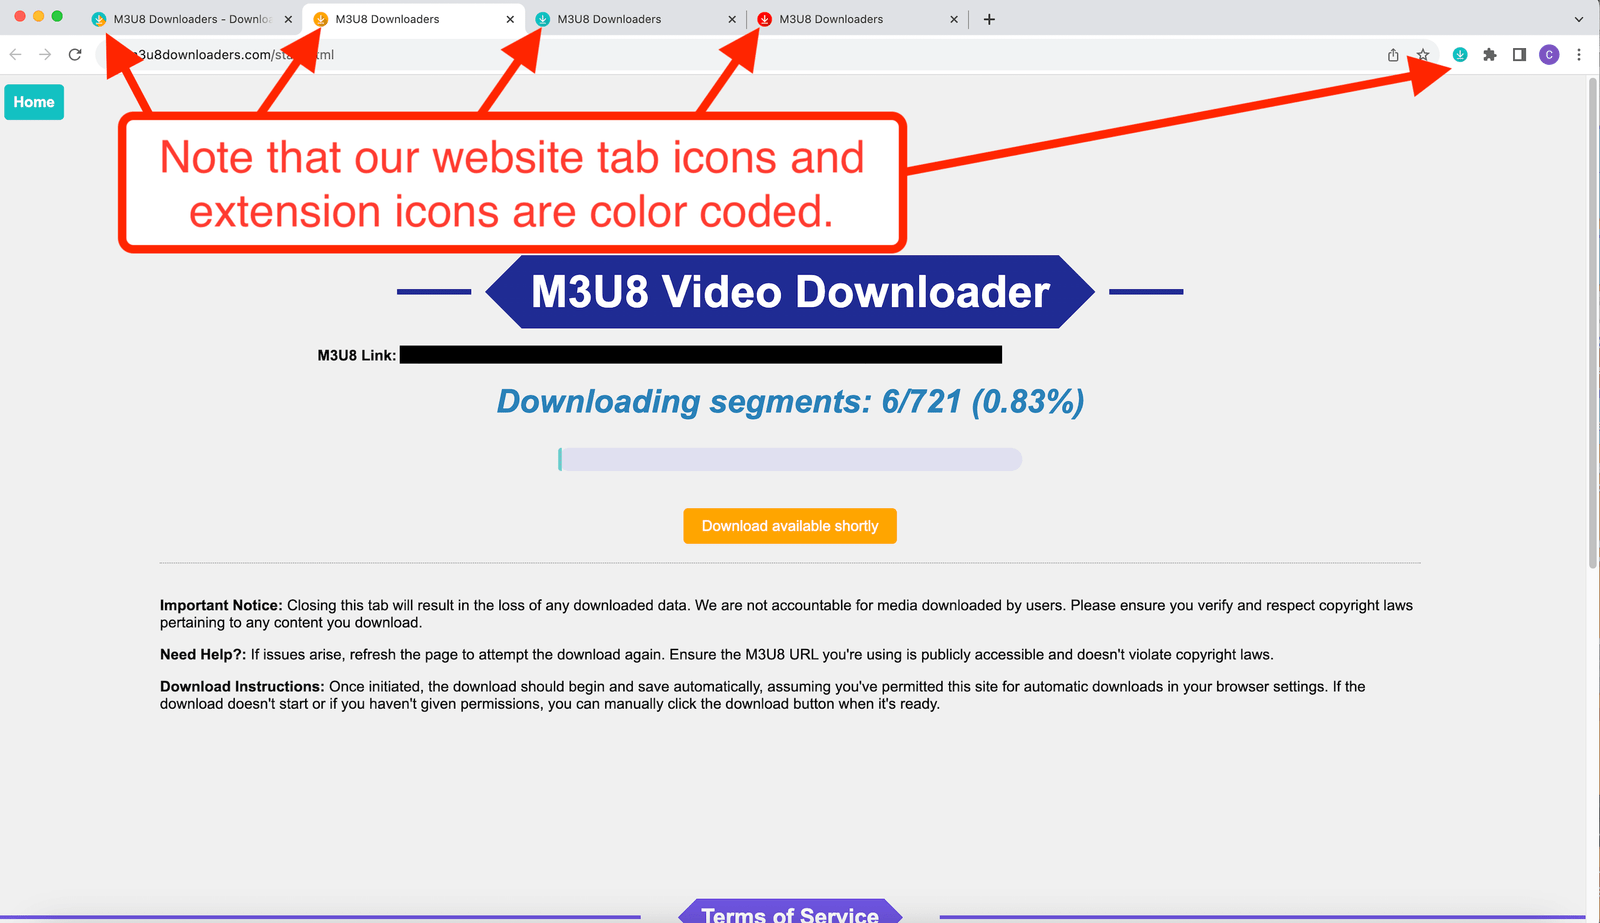 M3U8 Video Downloader - downloading M3U8